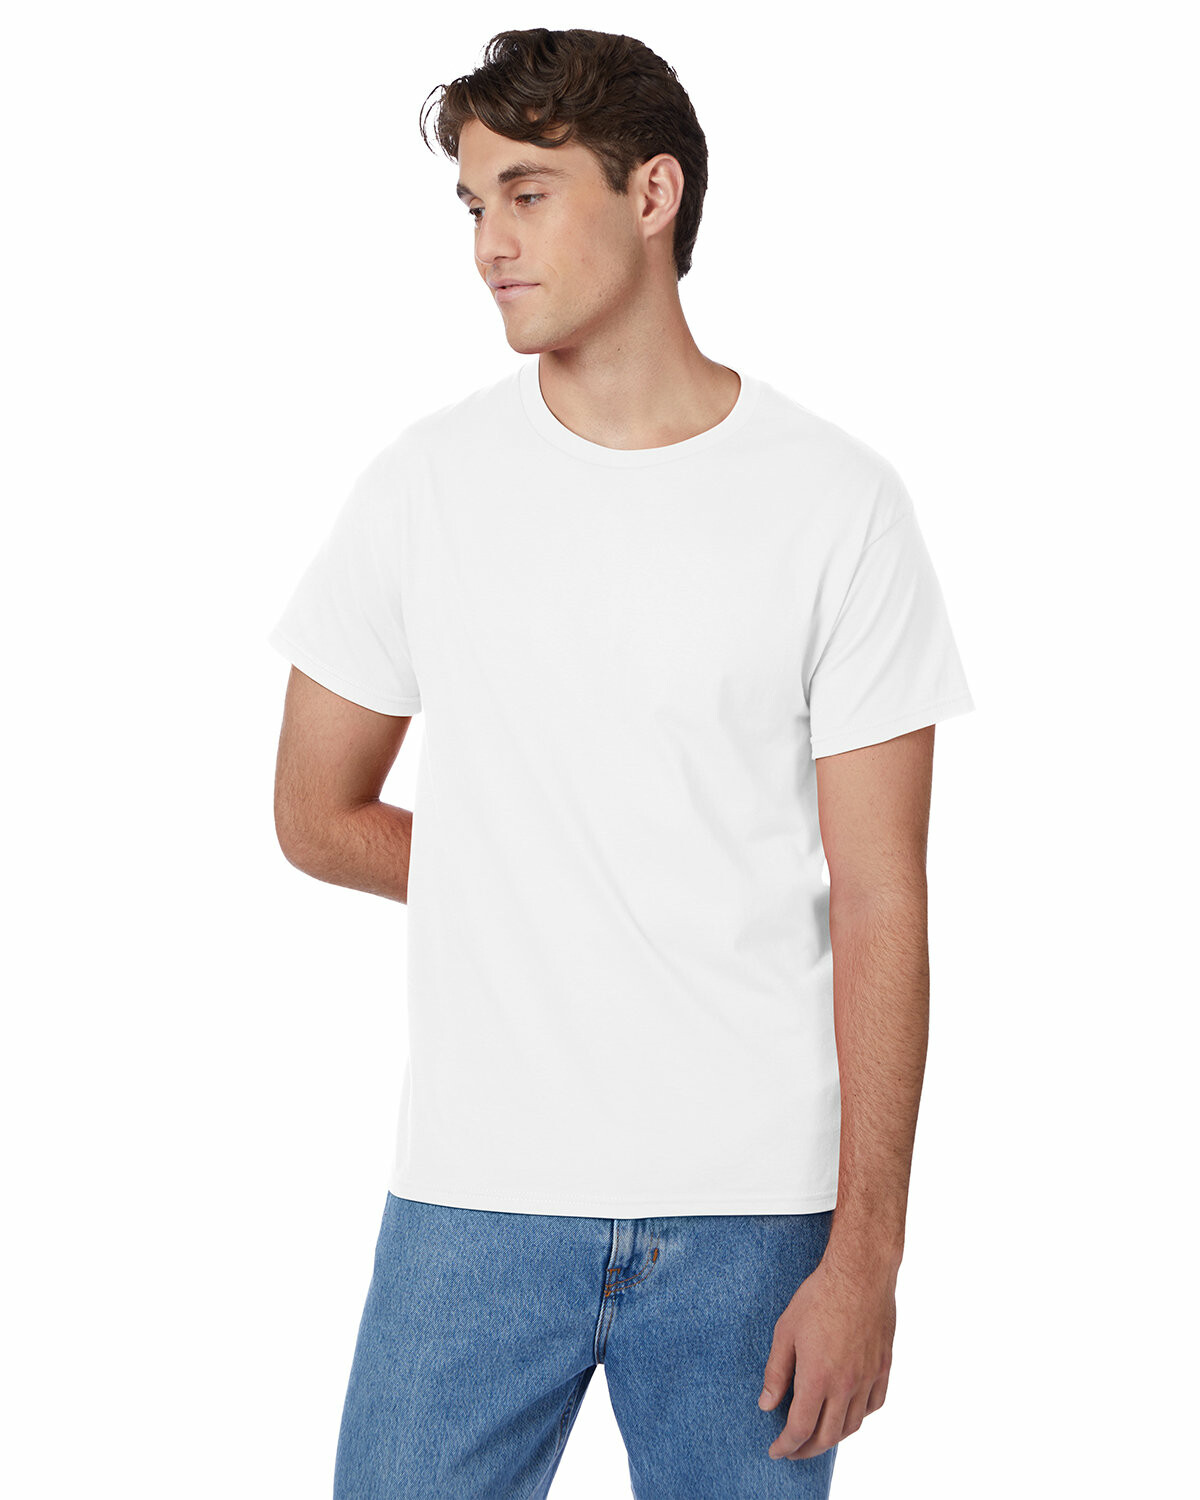 3 pcs Hanes Round Neck White T-Shirt 100% Cotton